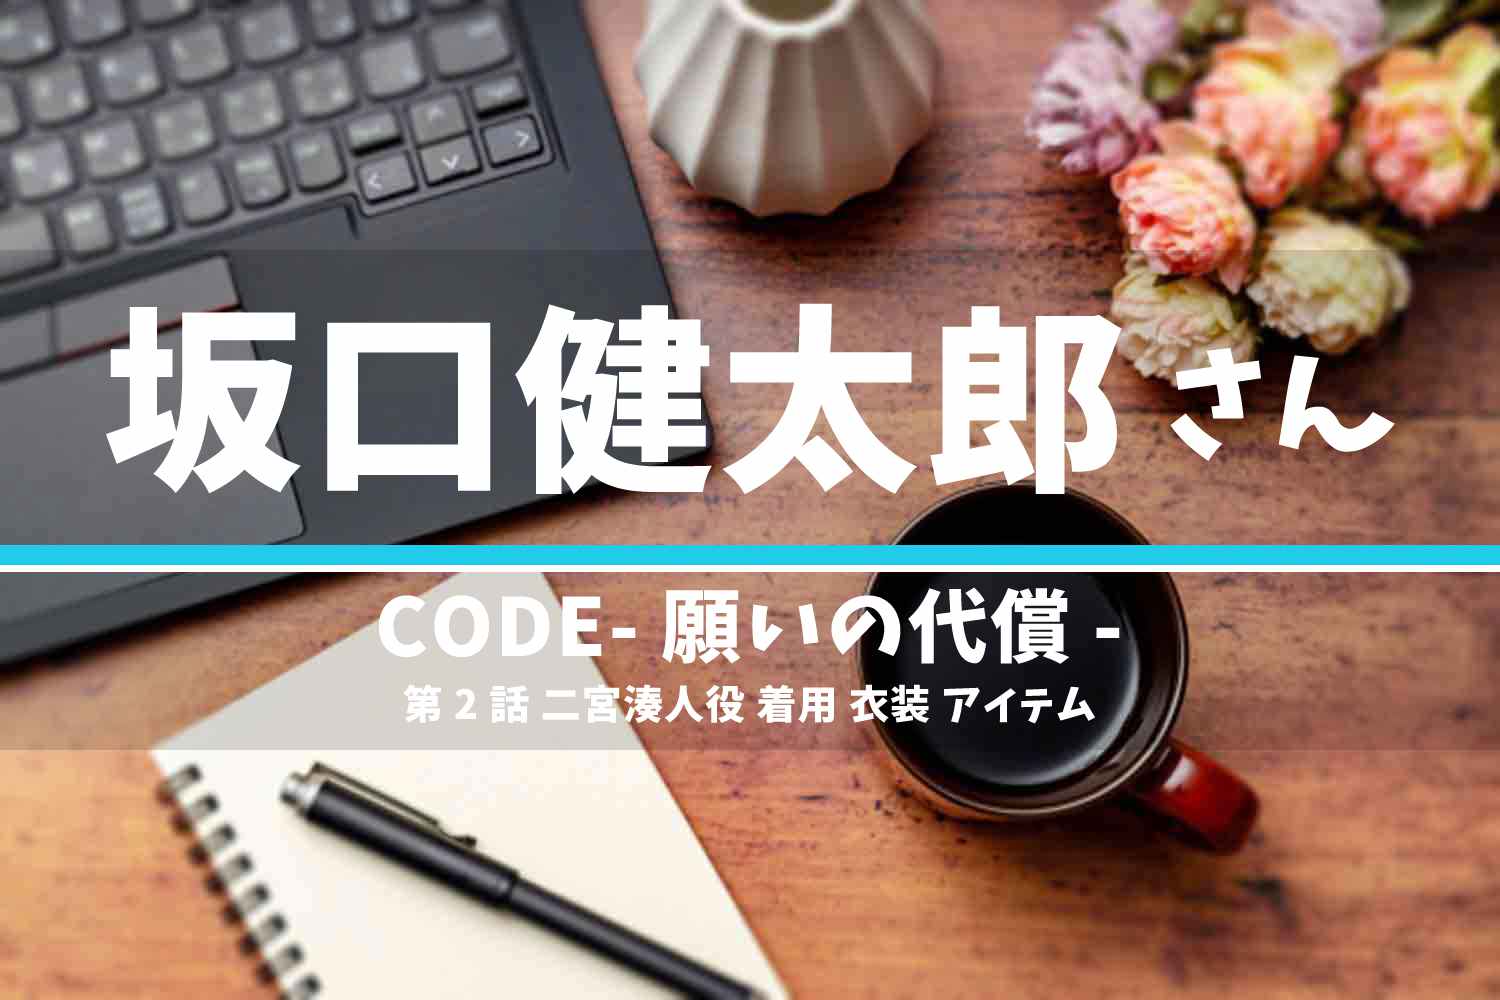 CODE-願いの代償- 坂口健太郎さん テレビドラマ 衣装 2023年7月9日放送